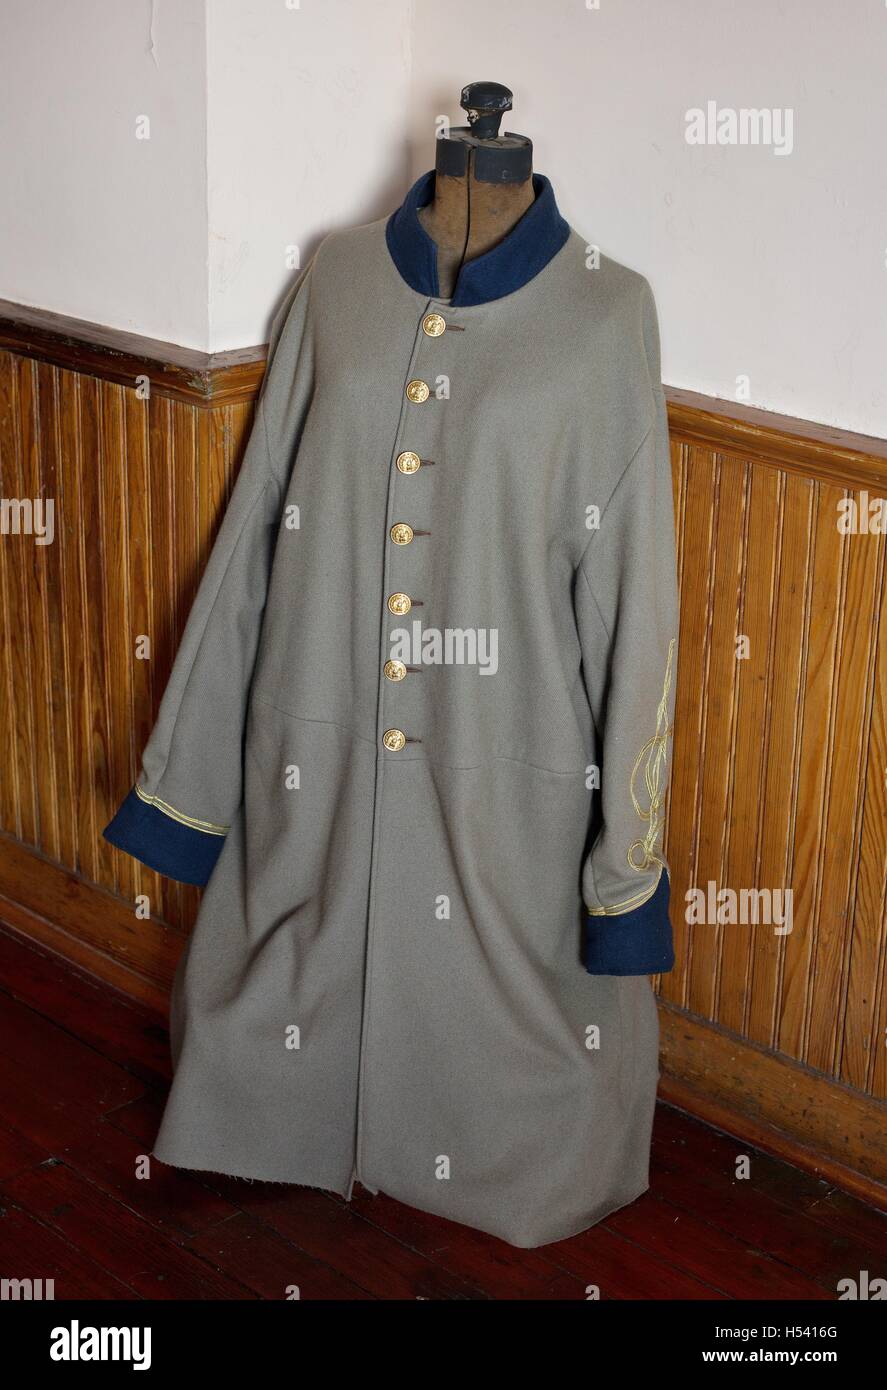 A Confederate uniform from the American Civil war, on display at the Van Buren River Valley Museum in Van Buren, Arkansas, USA. Stock Photo